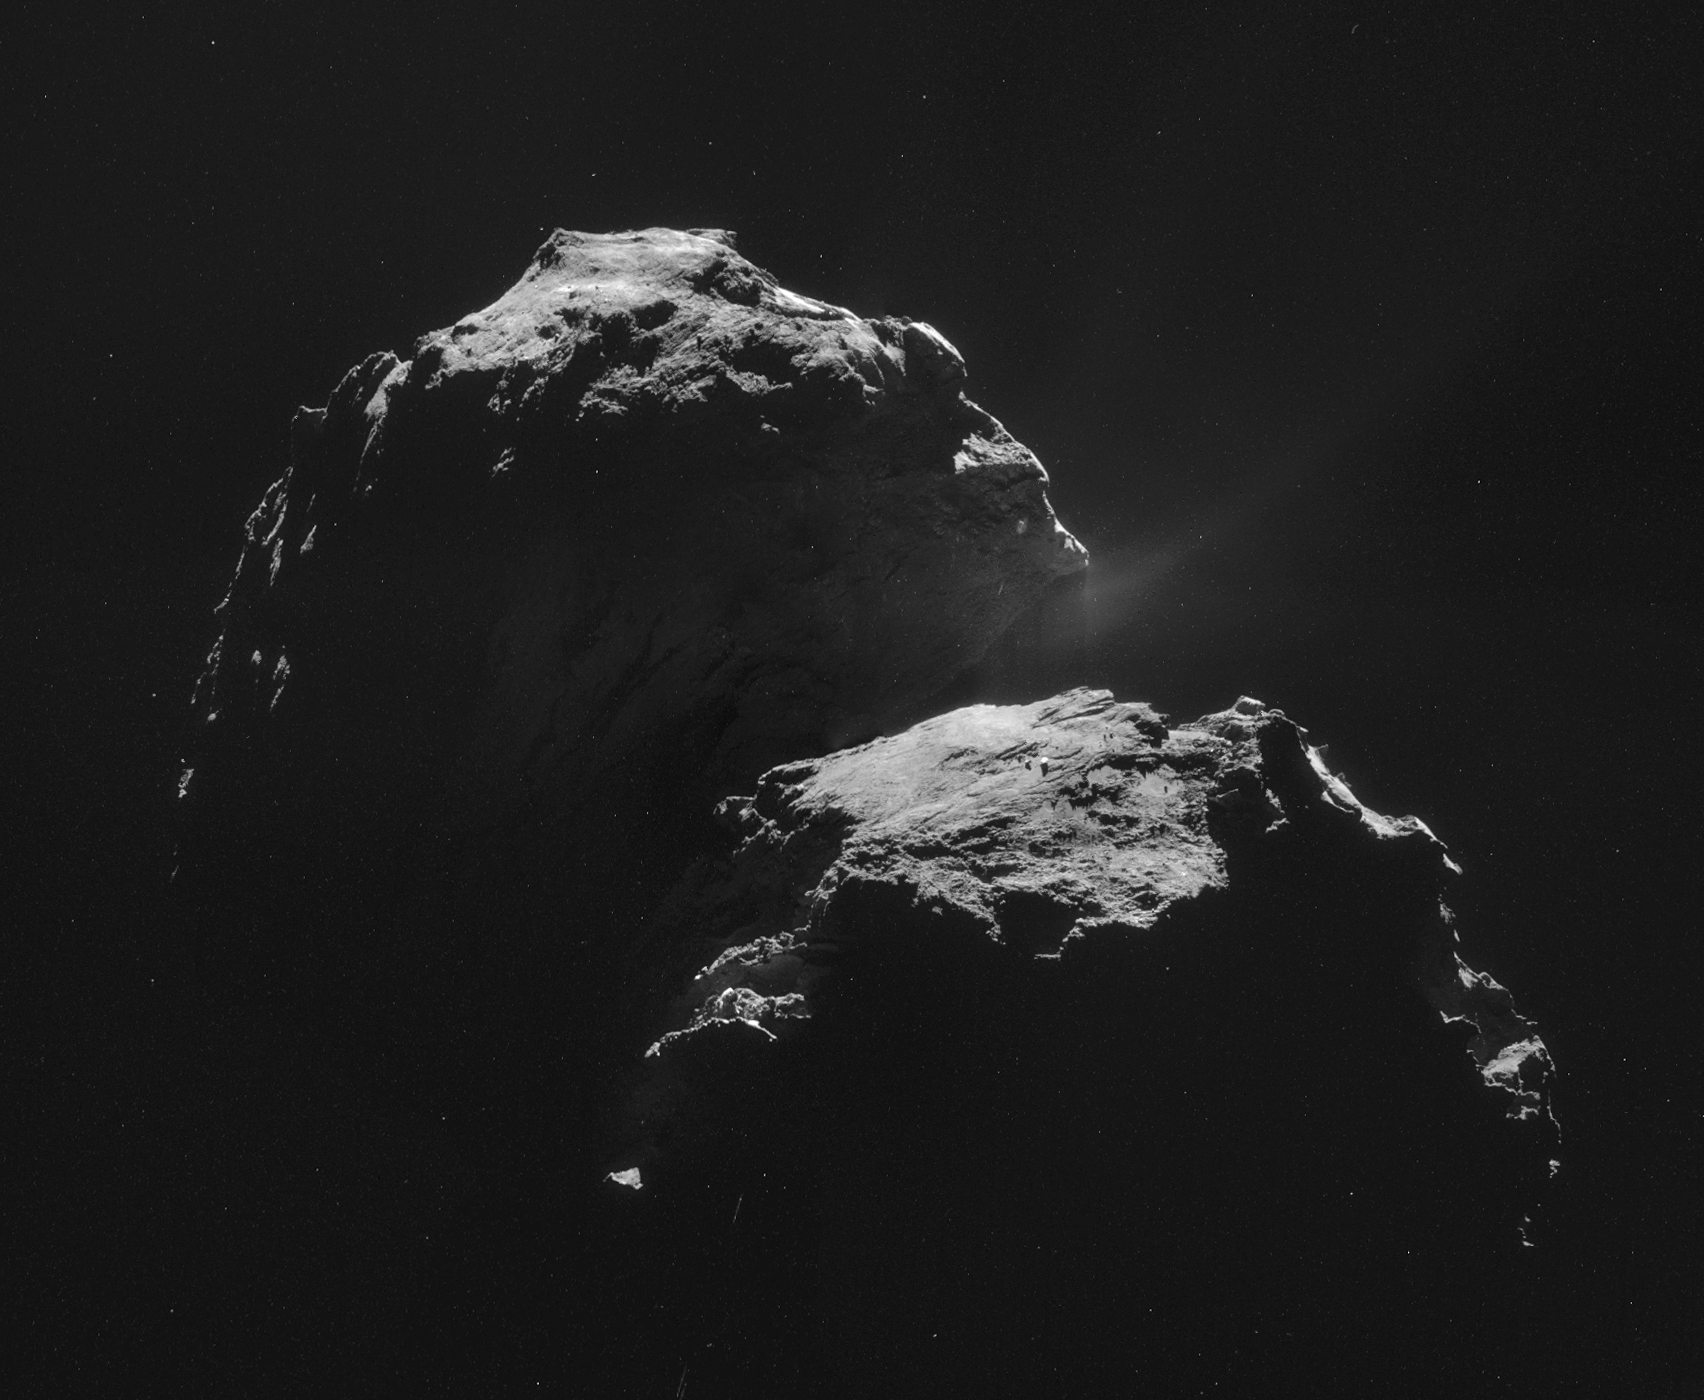 Comet 67P on Nov. 4, 2014.